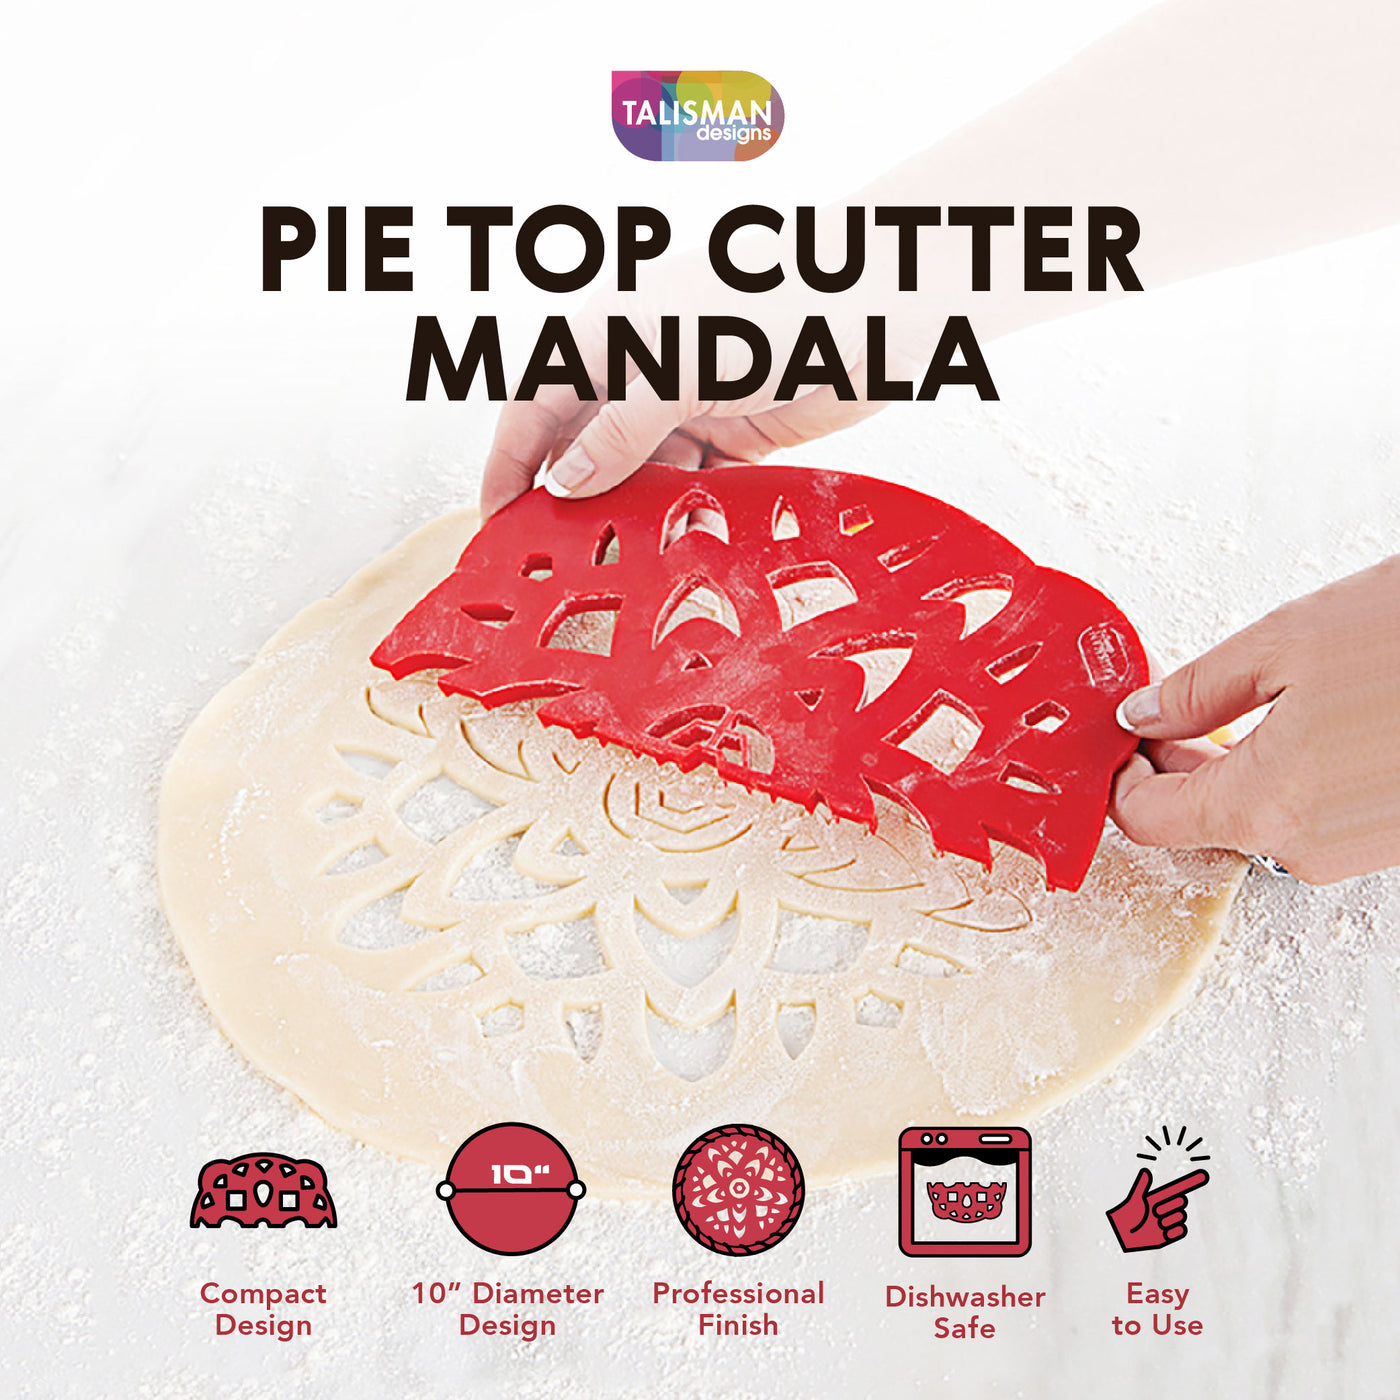 Nordic Ware Pie Top Cutters 